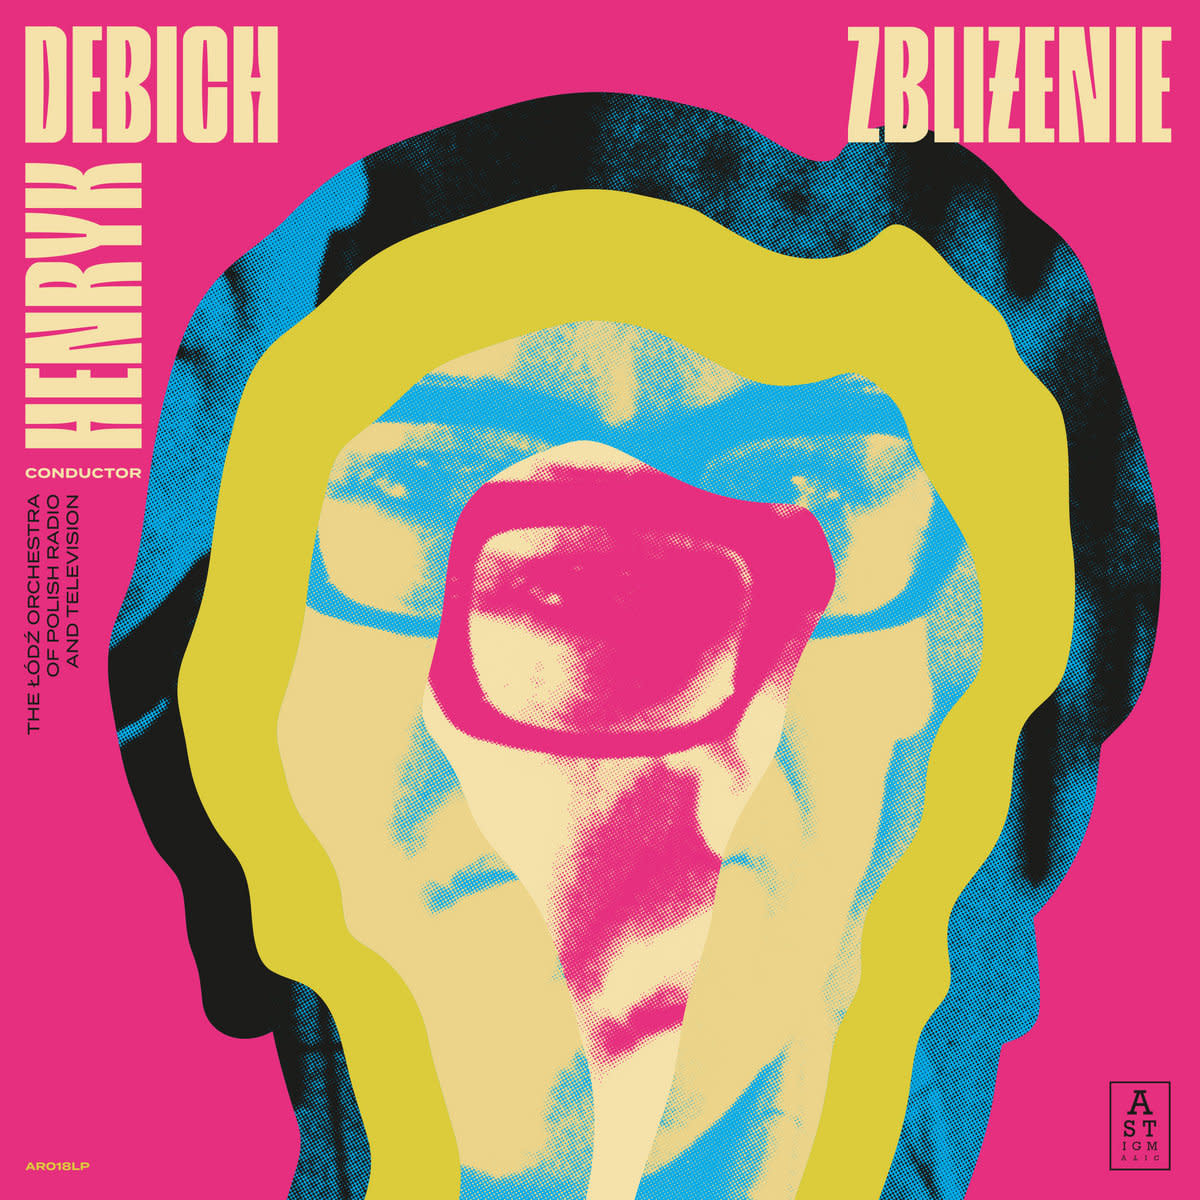 Astigmatic Records Henryk Debich - Zbliżenie